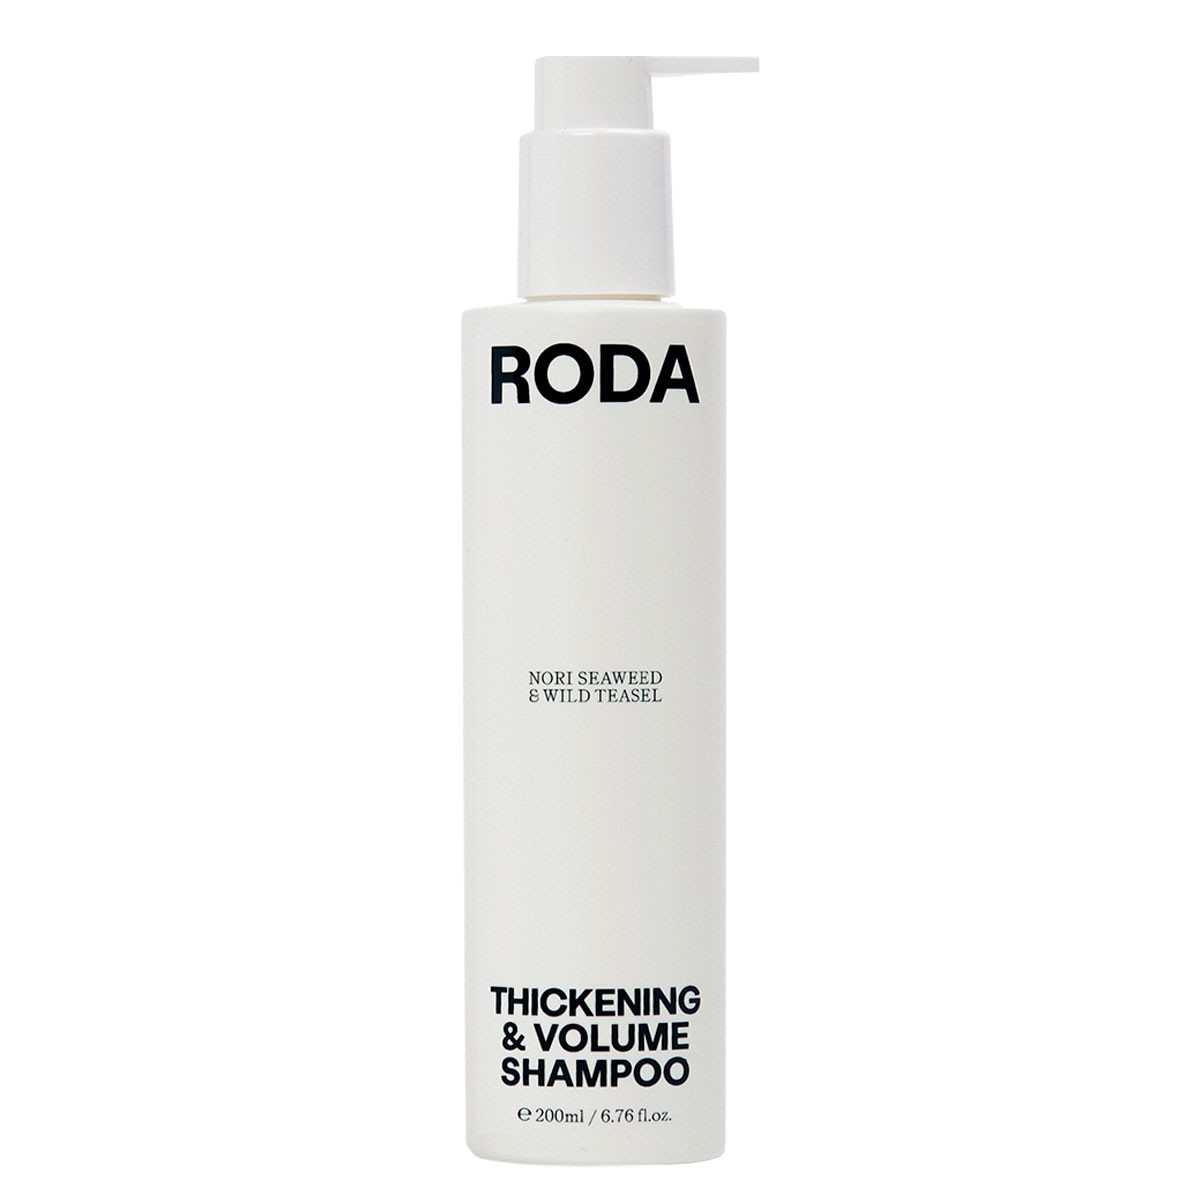 Thickening & Volume Shampoo - Champú para volumen y anticaida